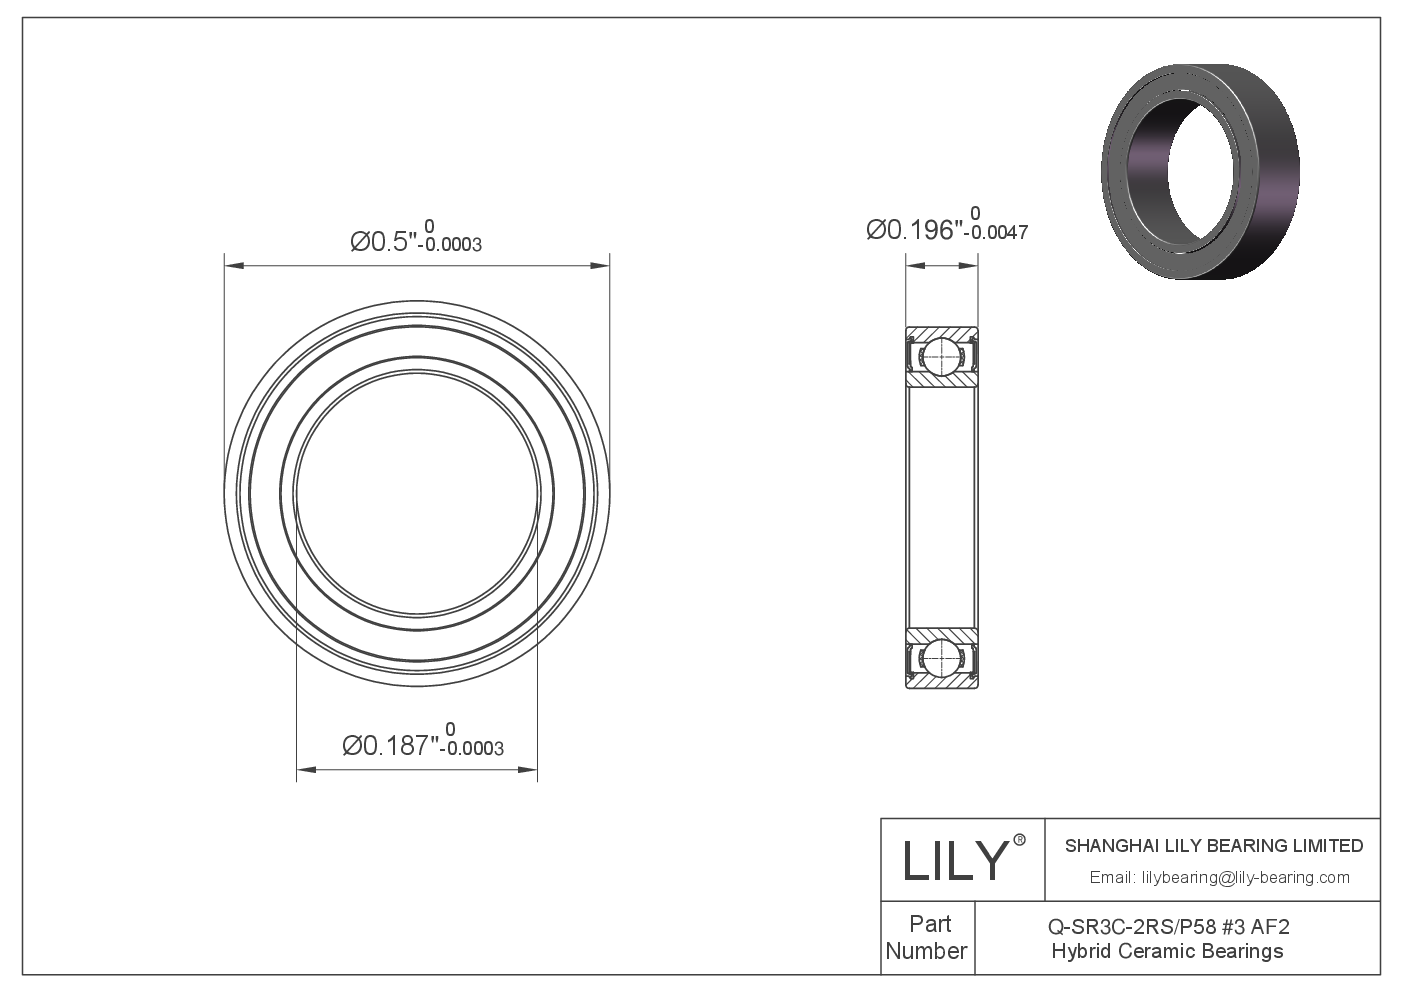 Q-SR3C-2RS/P58 #3 AF2 Hybrid Ceramic Deep Groove Ball Bearings CAD图形